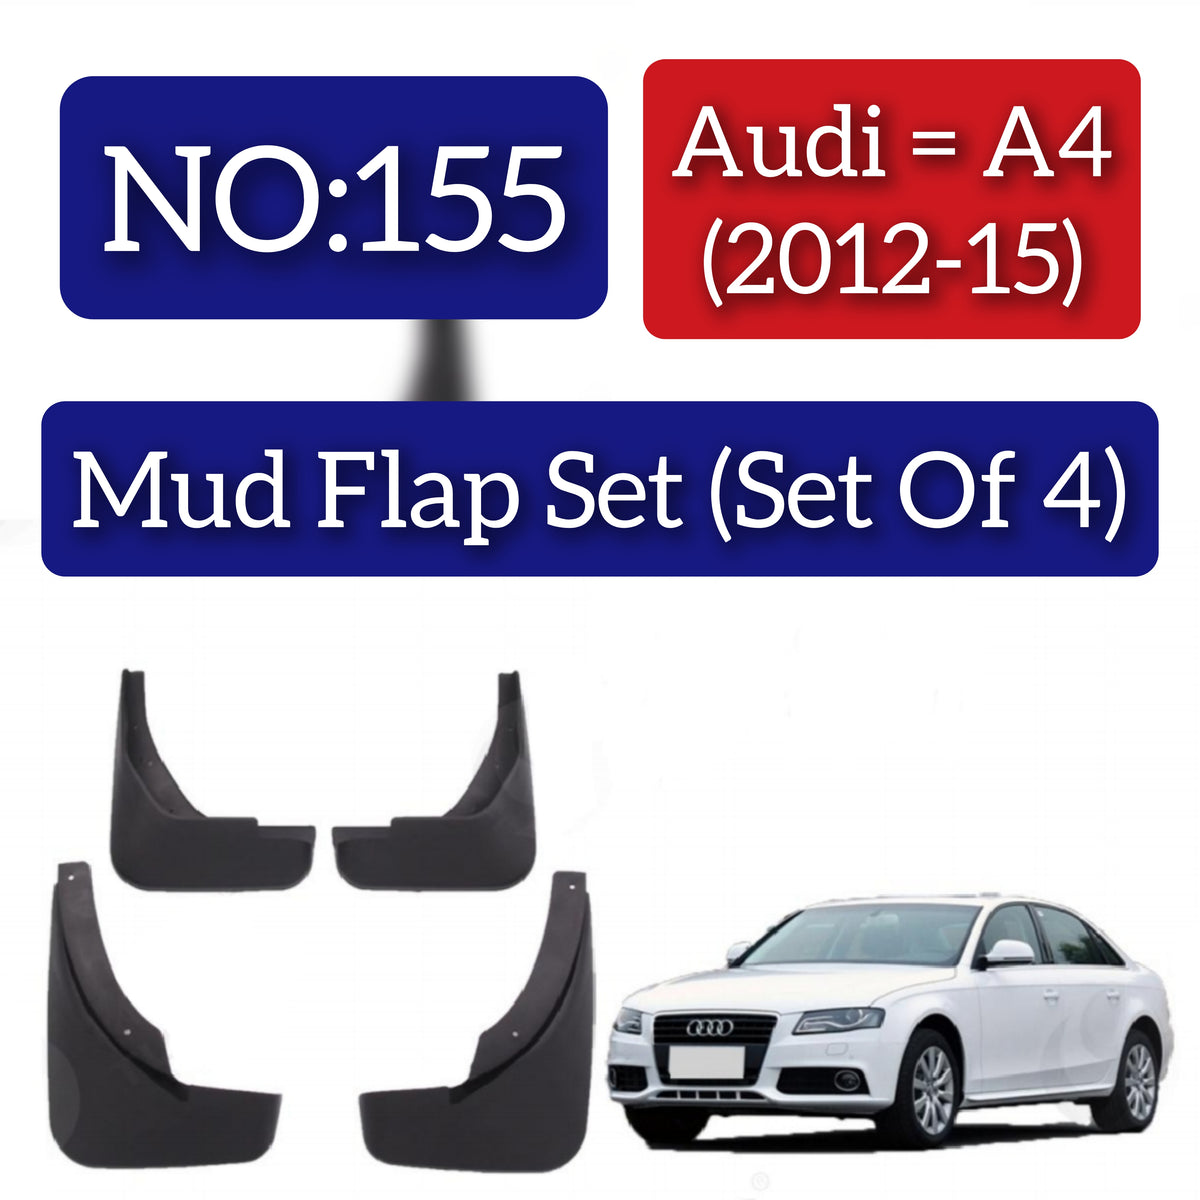 Audi A4 (2012-15) Mud Flap Set (Set of 4)  Tag 155